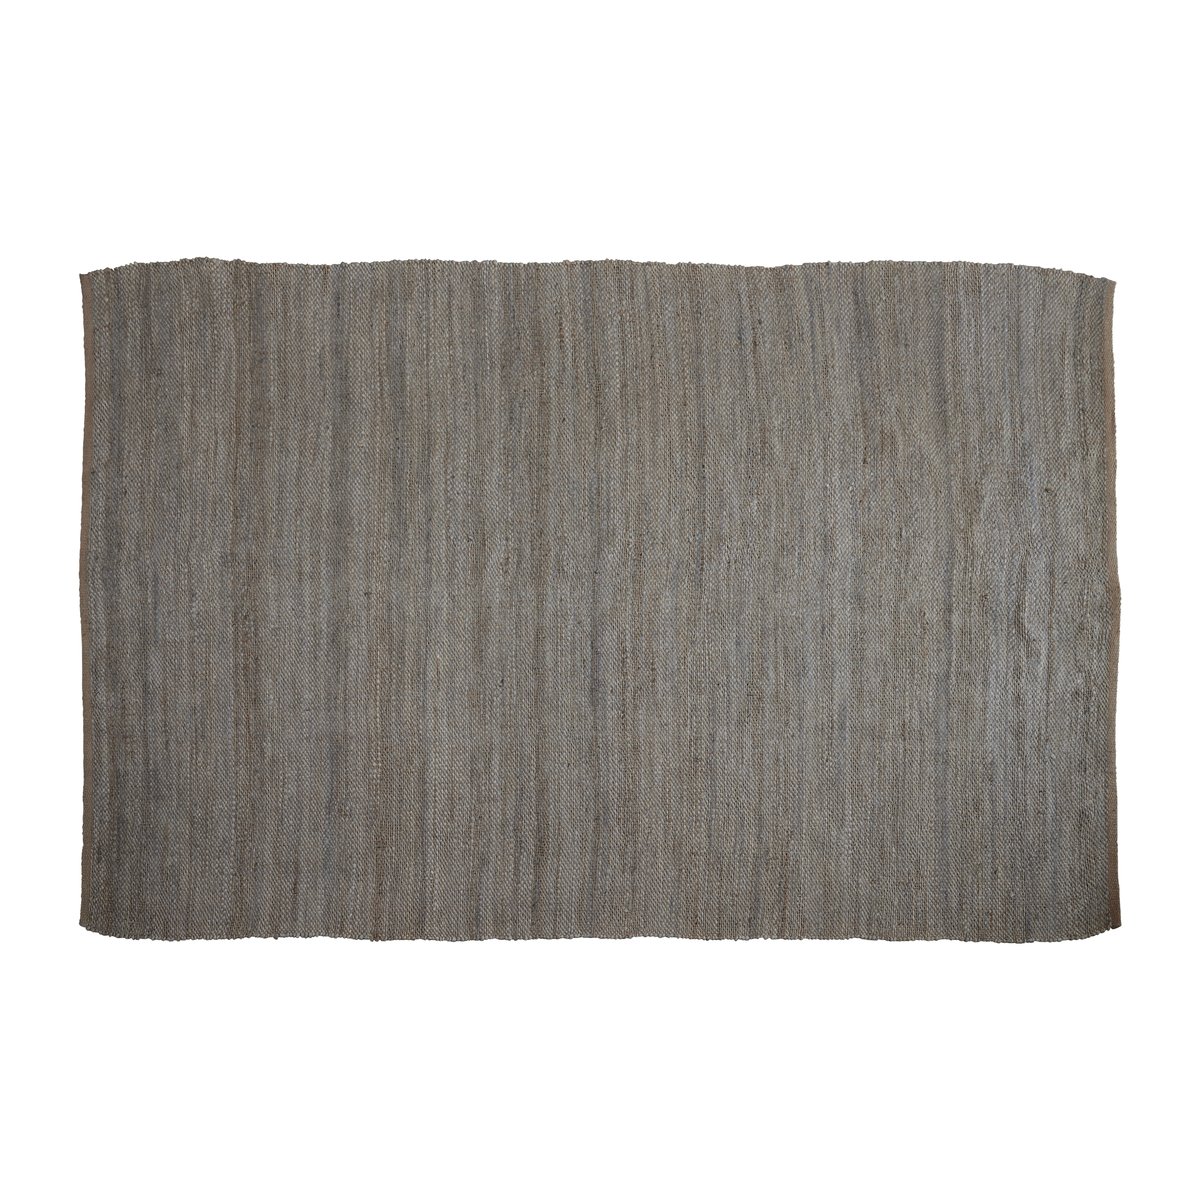 Lene Bjerre Strissie vloerkleed 200x300 cm, grey-nature